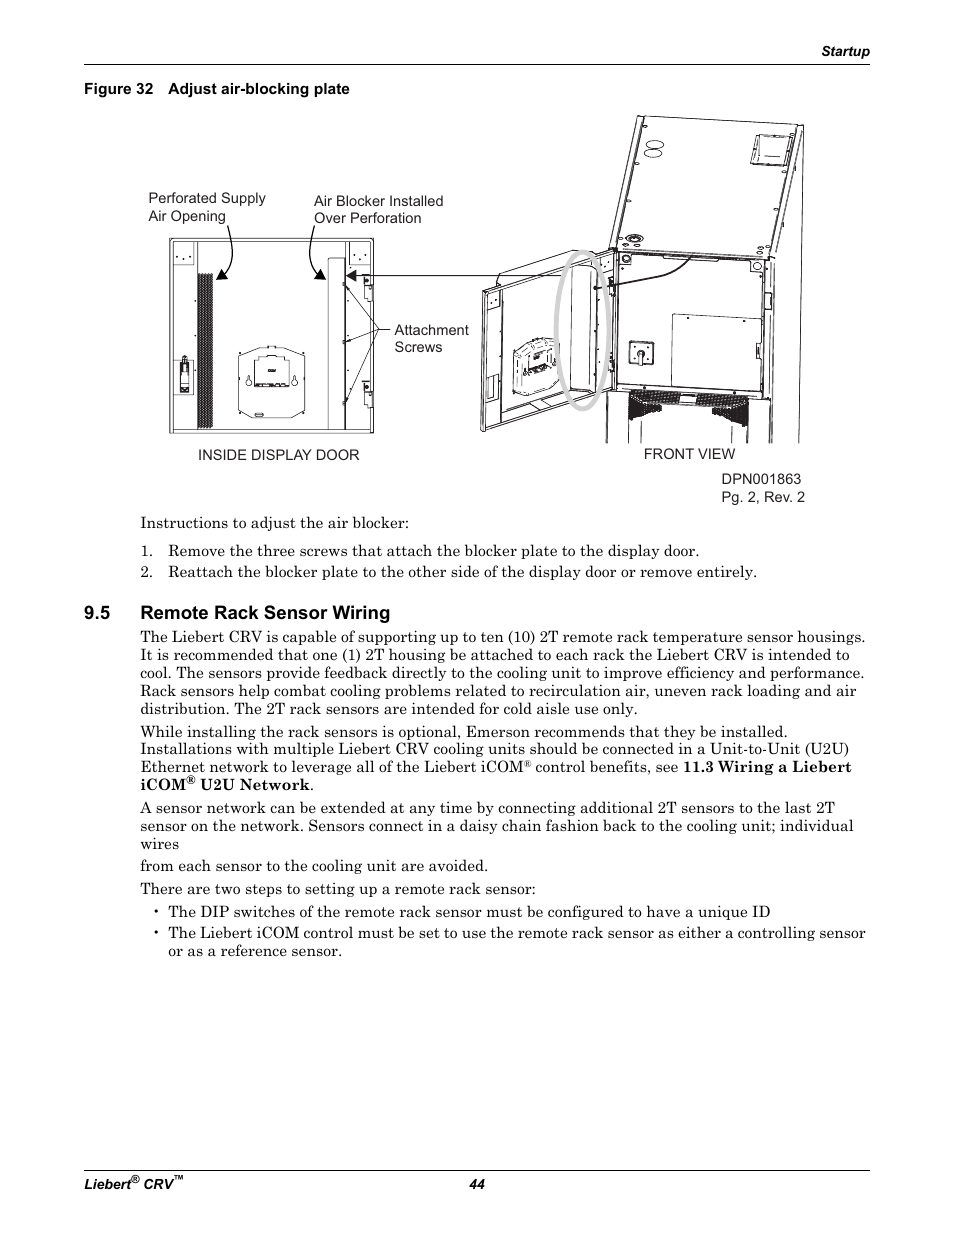 Figure 32 adjust air-blocking plate, 5 remote rack sensor wiring, Remote  rack sensor wiring | Emerson Liebert CRV 1 2 3 4 5 6 7 8 9 10 11 12 13 14  15 16 17 18 19 20 21 22 23 24 25 C R 0 2 0 R A 1 C 7 S D 1 8 1 1 E L 1 0 P  A User Manual | Page 52 / 140 ...